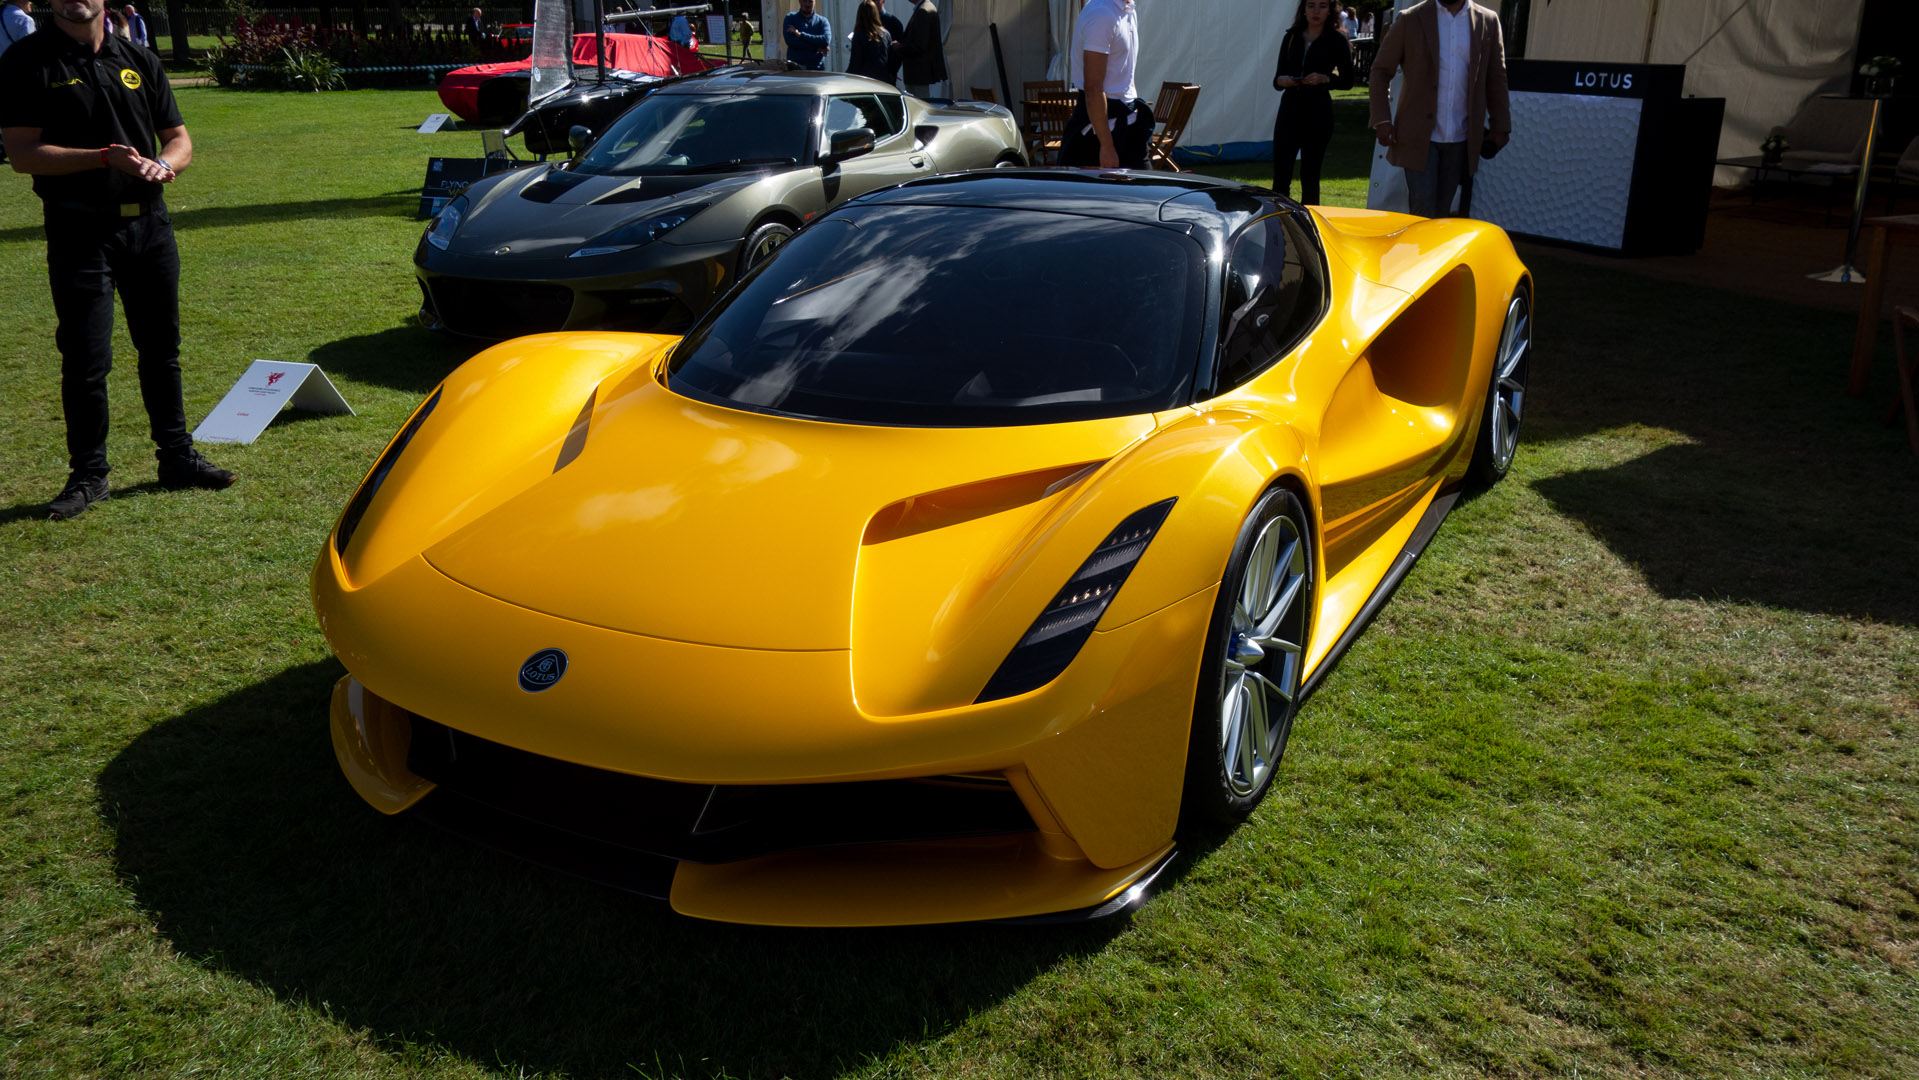 Lotus Evija front design